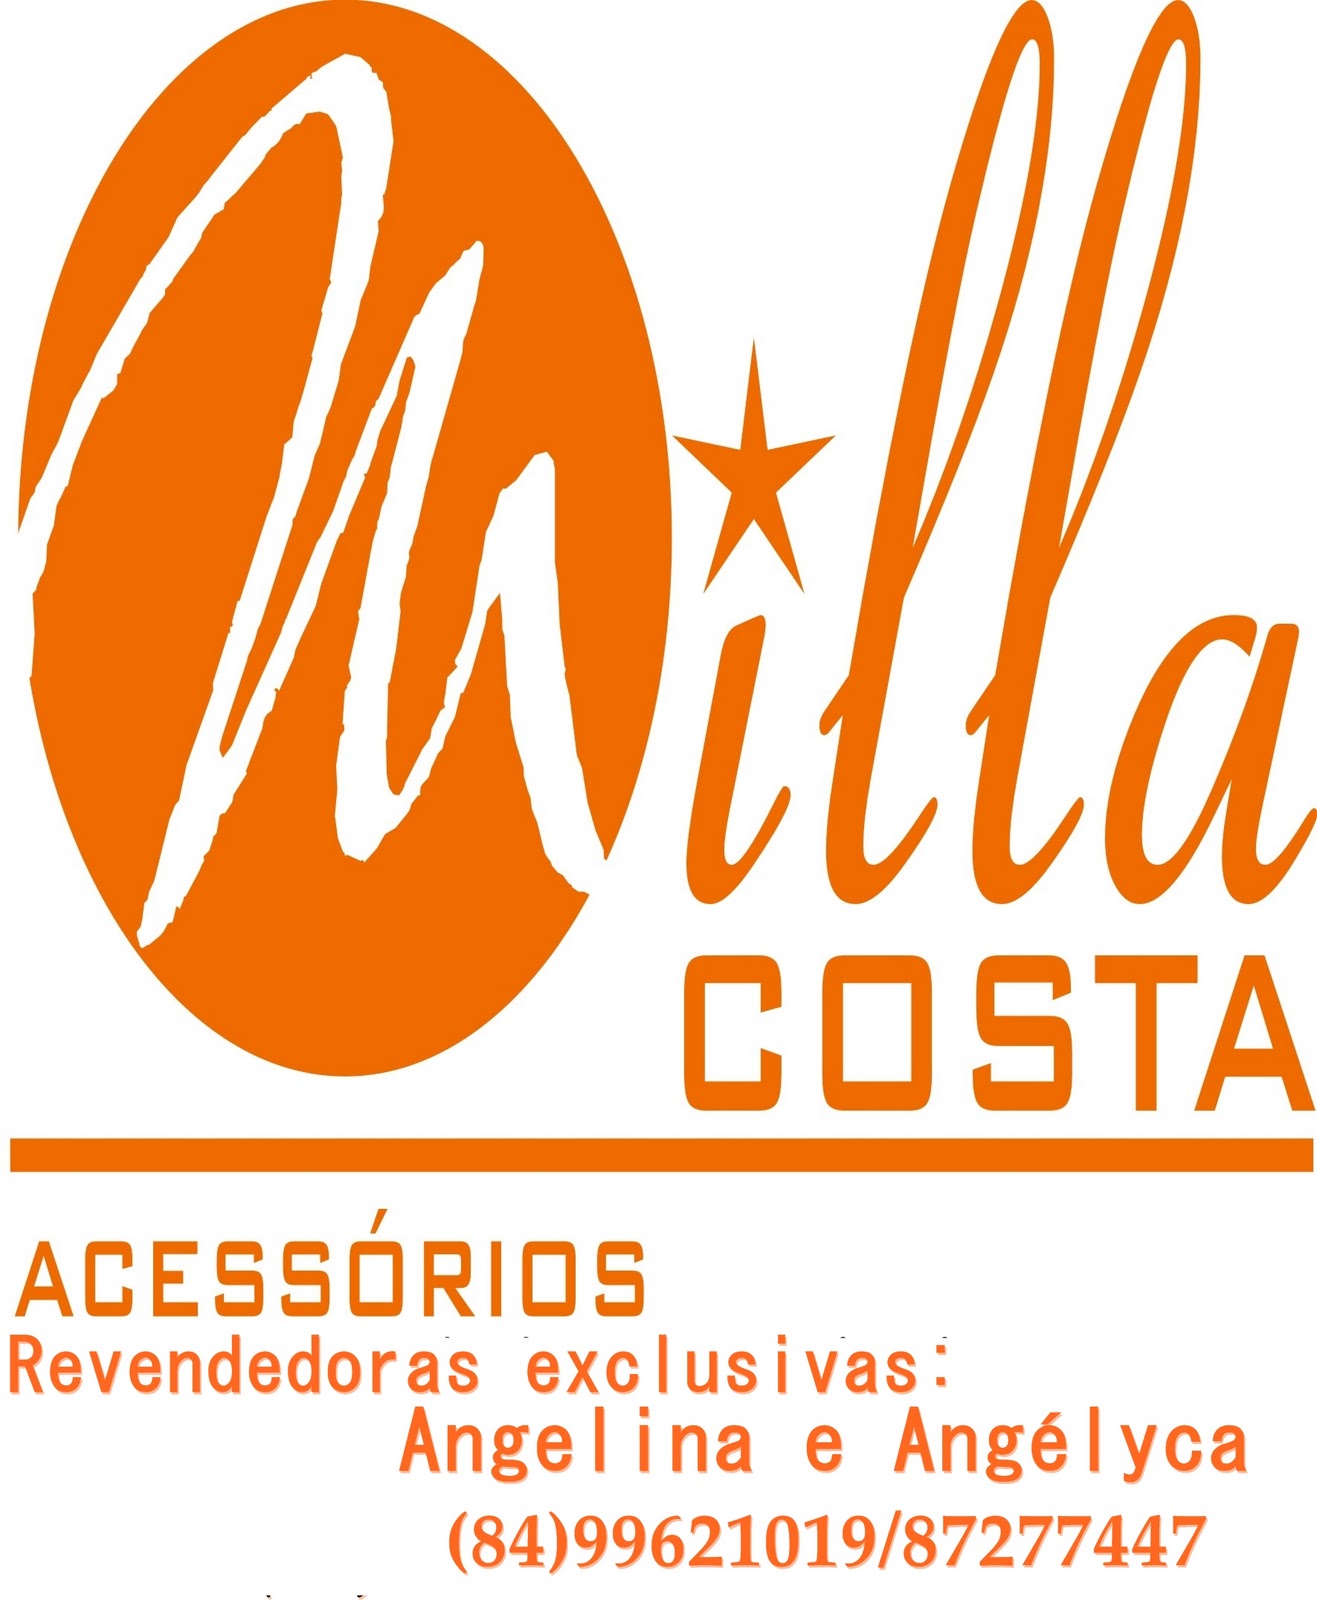 Milla Costa Acessorios Logo photo - 1